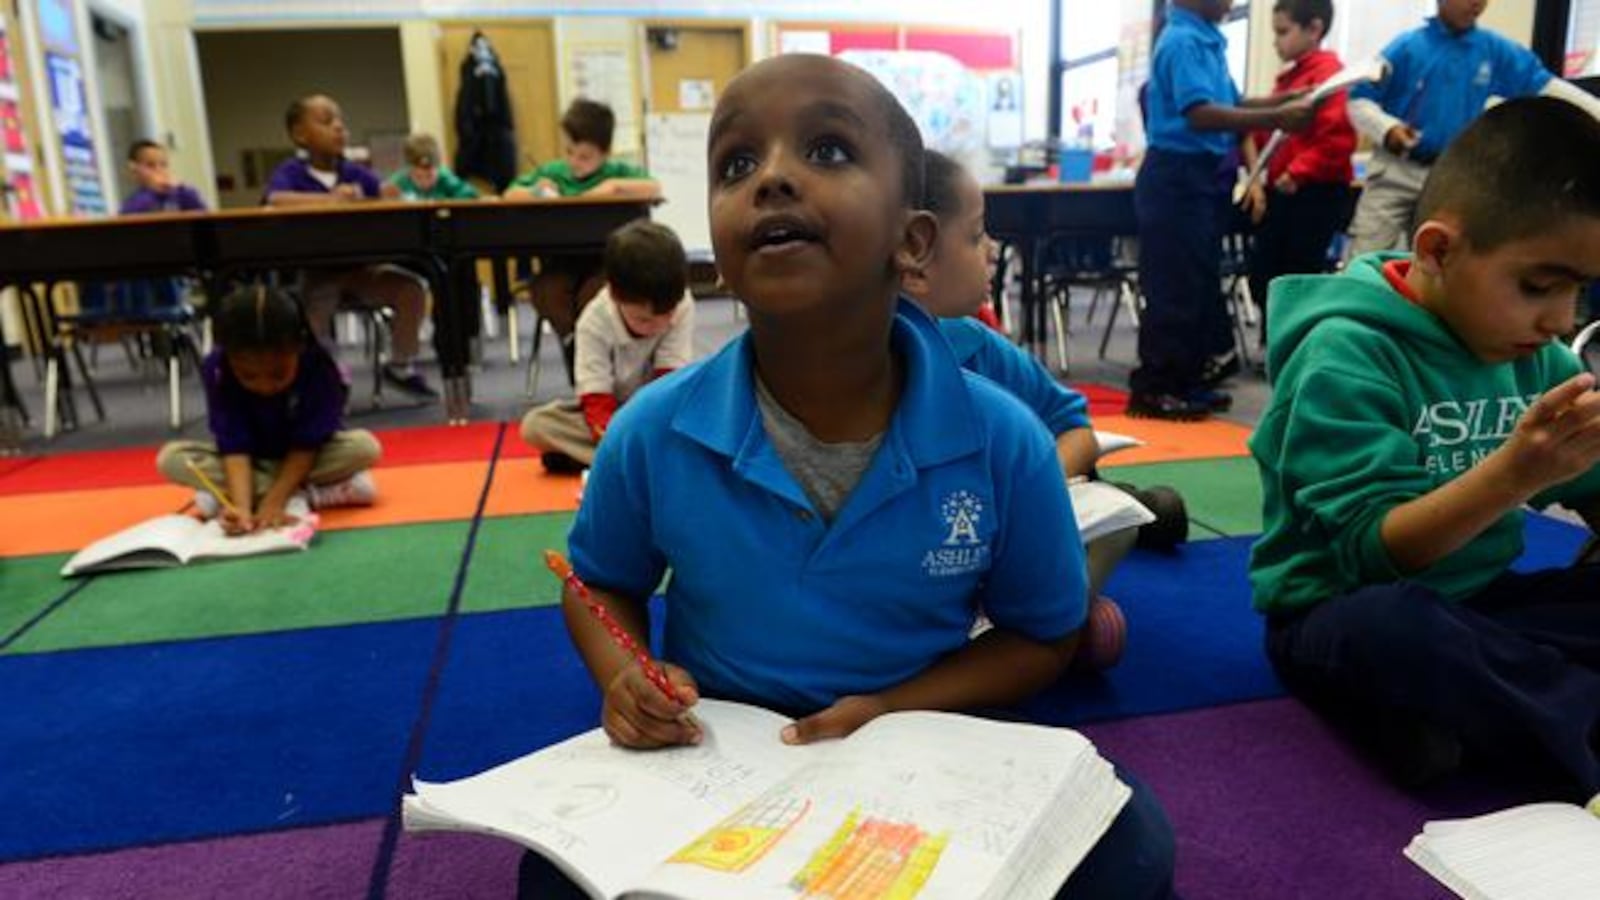 Five-year-old Samatar Abhullahi works during his kindergarten class at Denver's Ashley Elementary School.